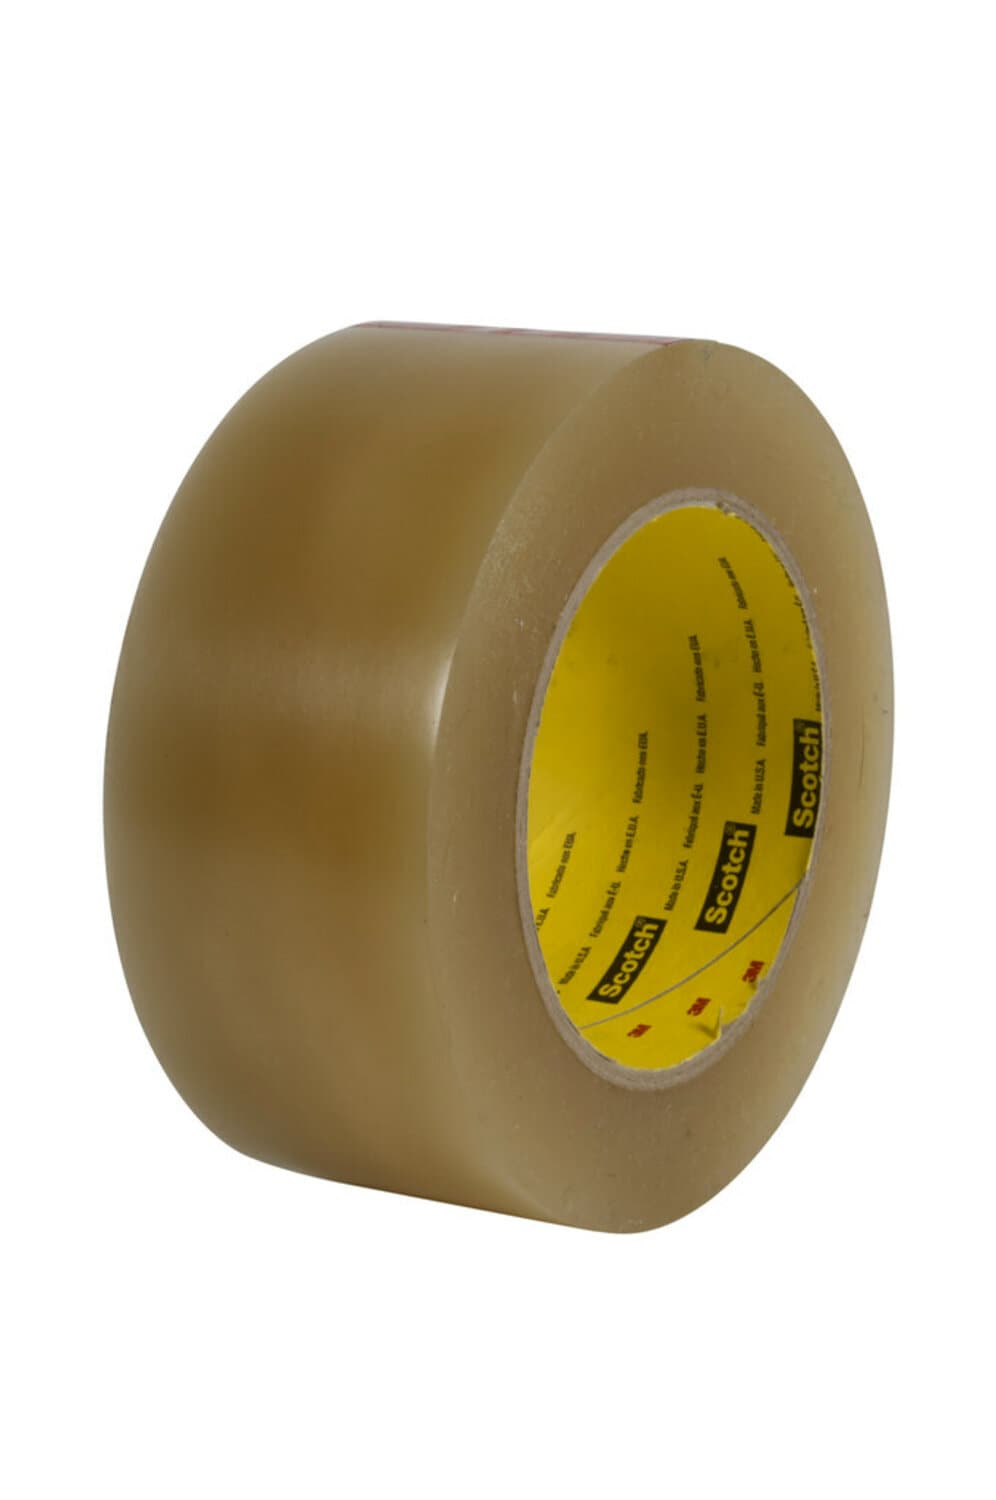 7010333525 - 3M Vinyl Tape 477, Transparent, 2 in x 36 yd, 7.2 mil, 24 rolls per
case